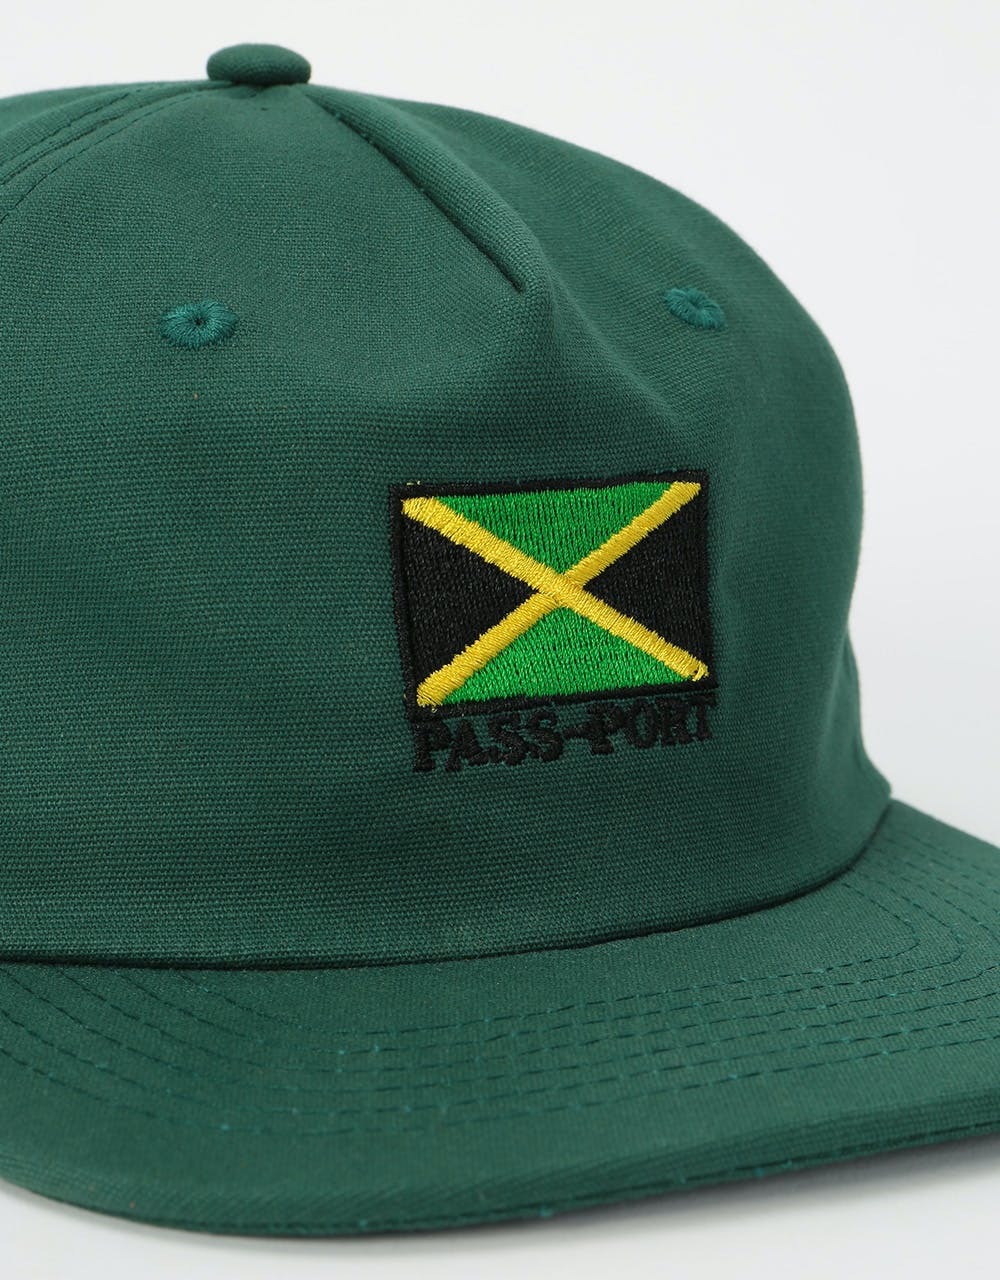 Pass Port Jamaica Strapback Cap - Green